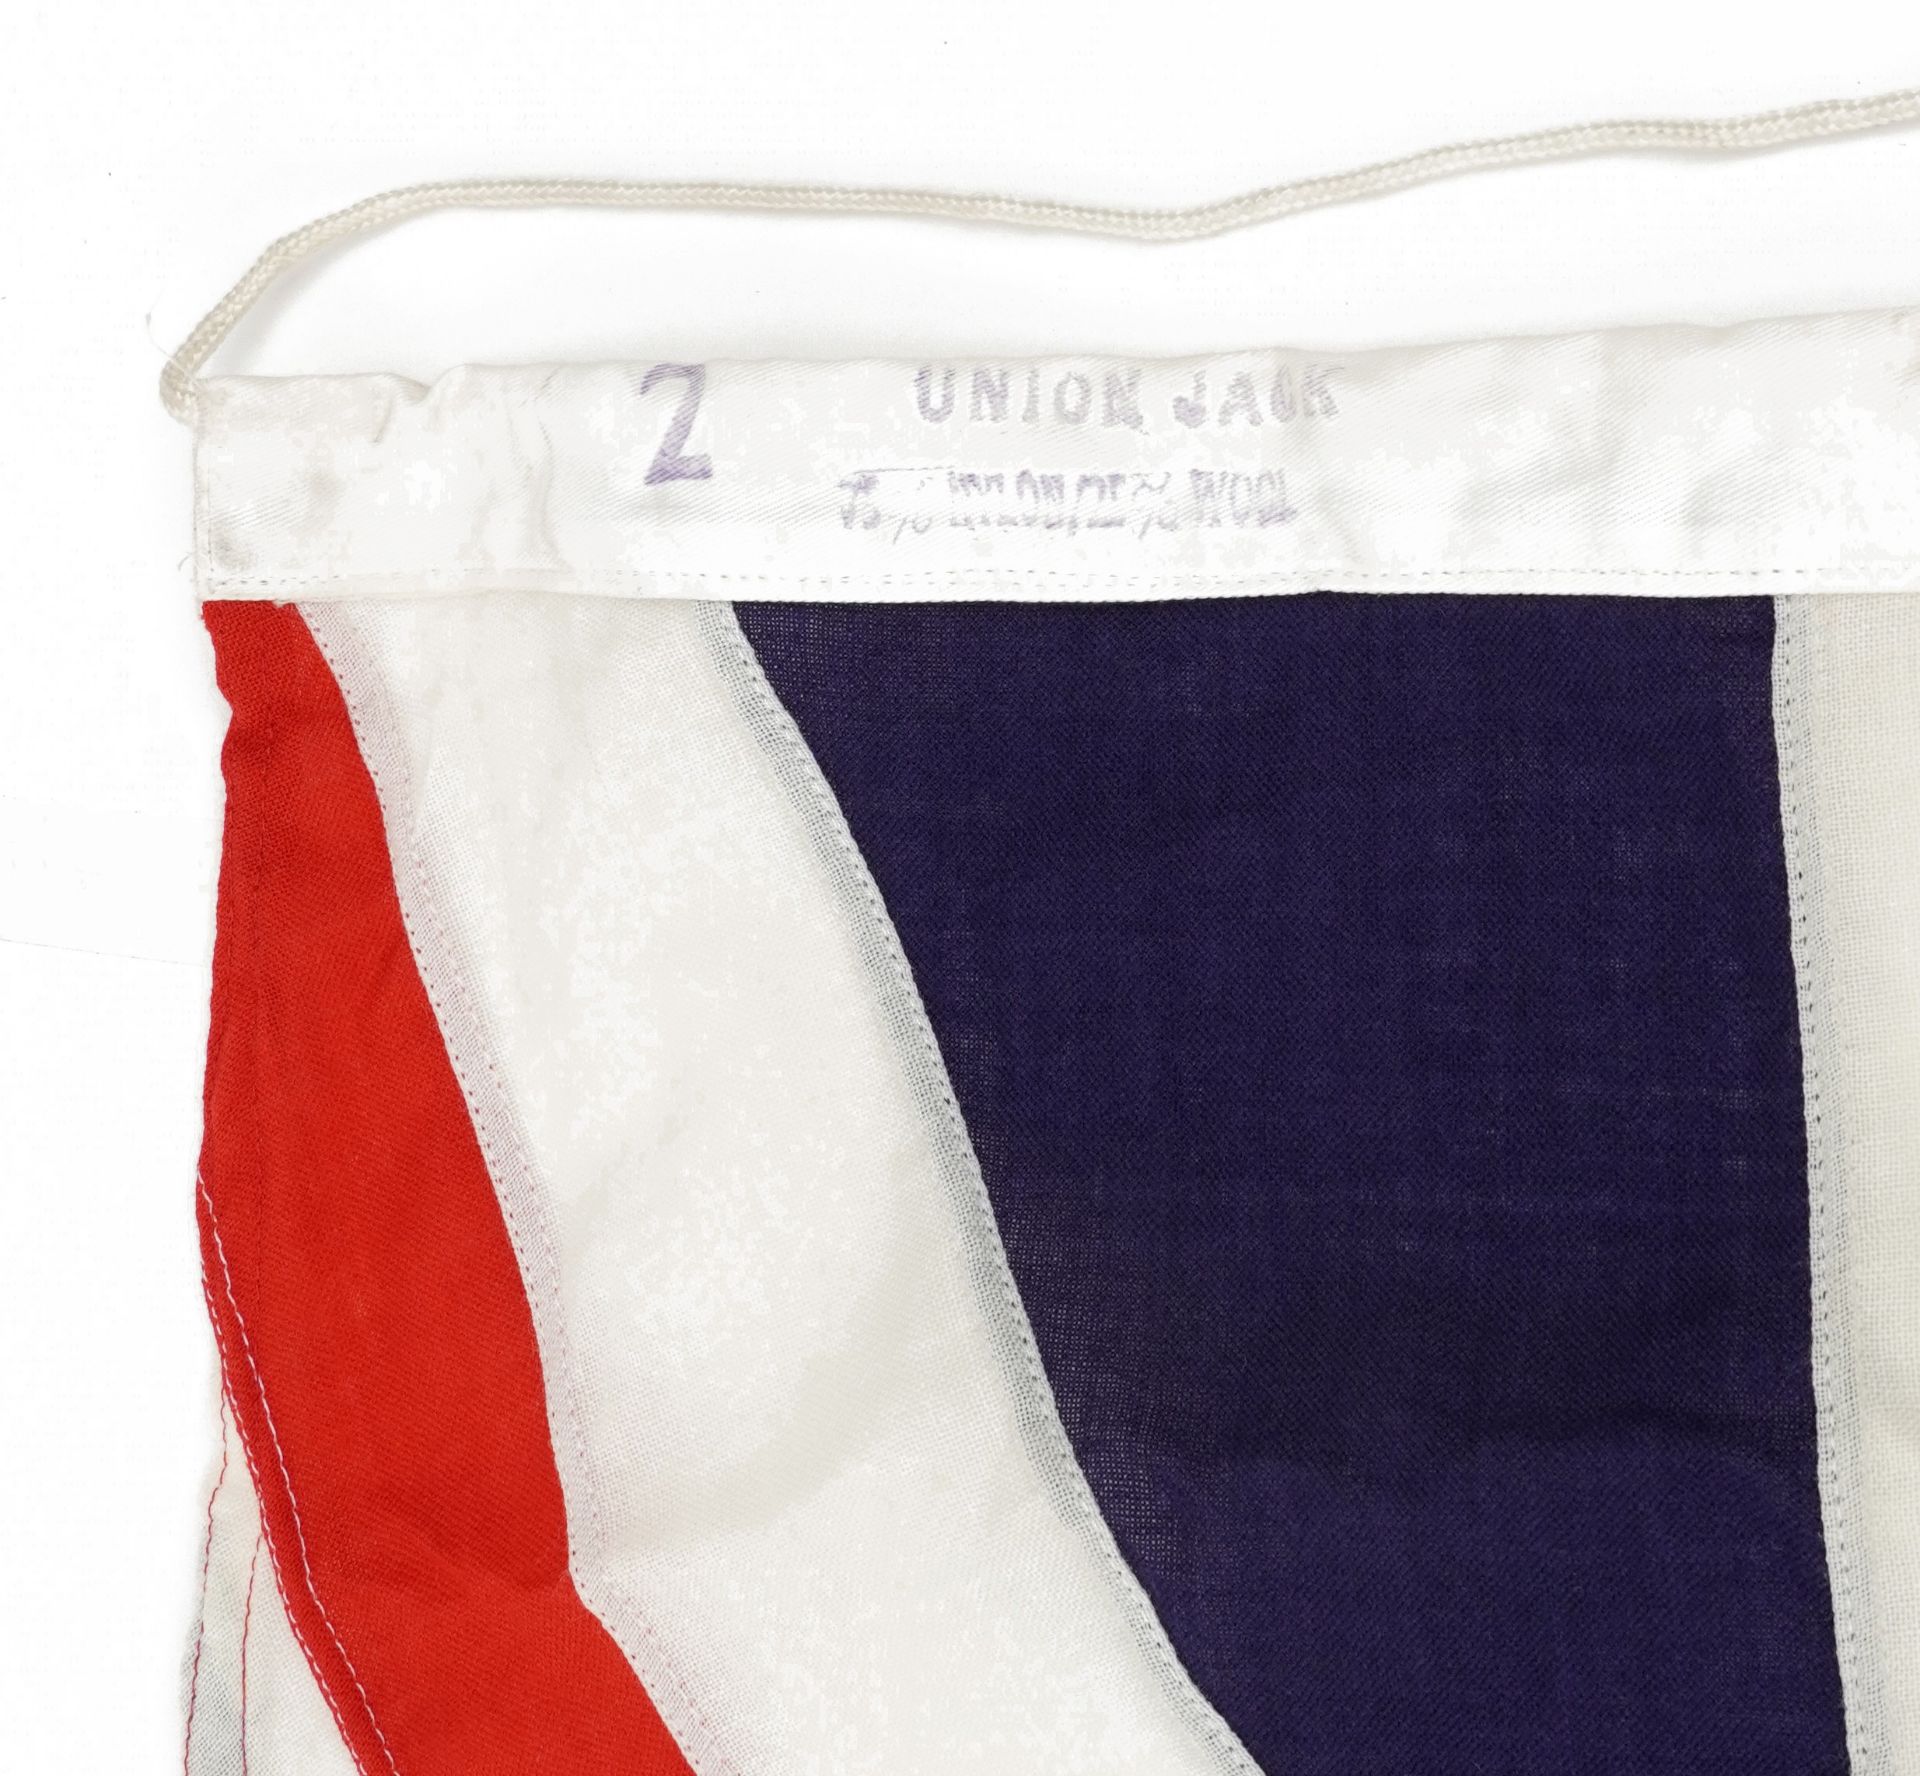 Military interest union jack flag, 180cm x 82cm - Image 3 of 3